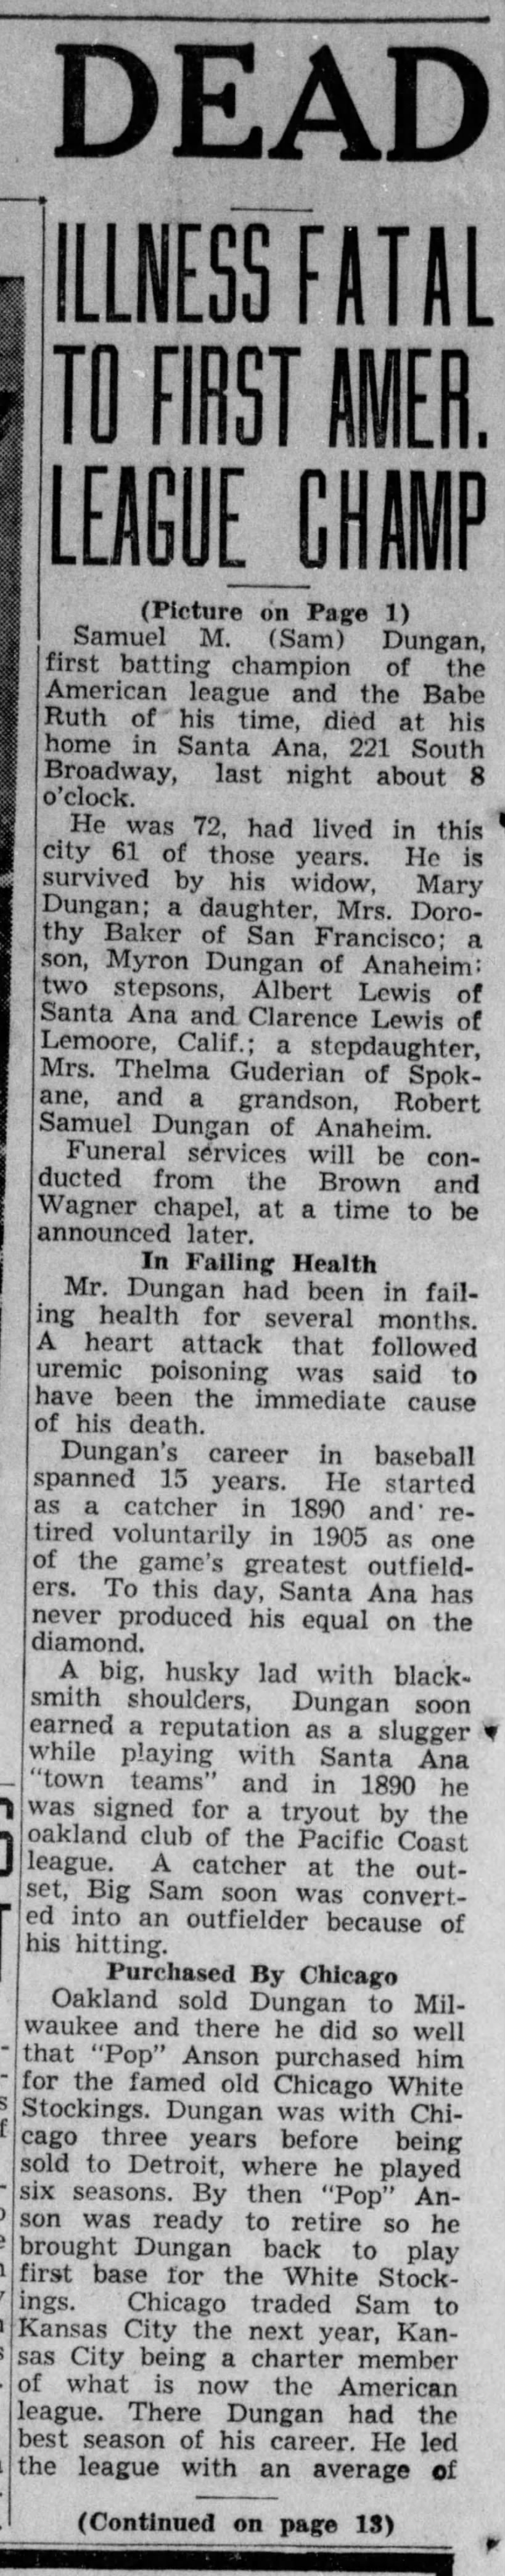 Sam Dungan, Old-Time Baseball Star, Is Dead